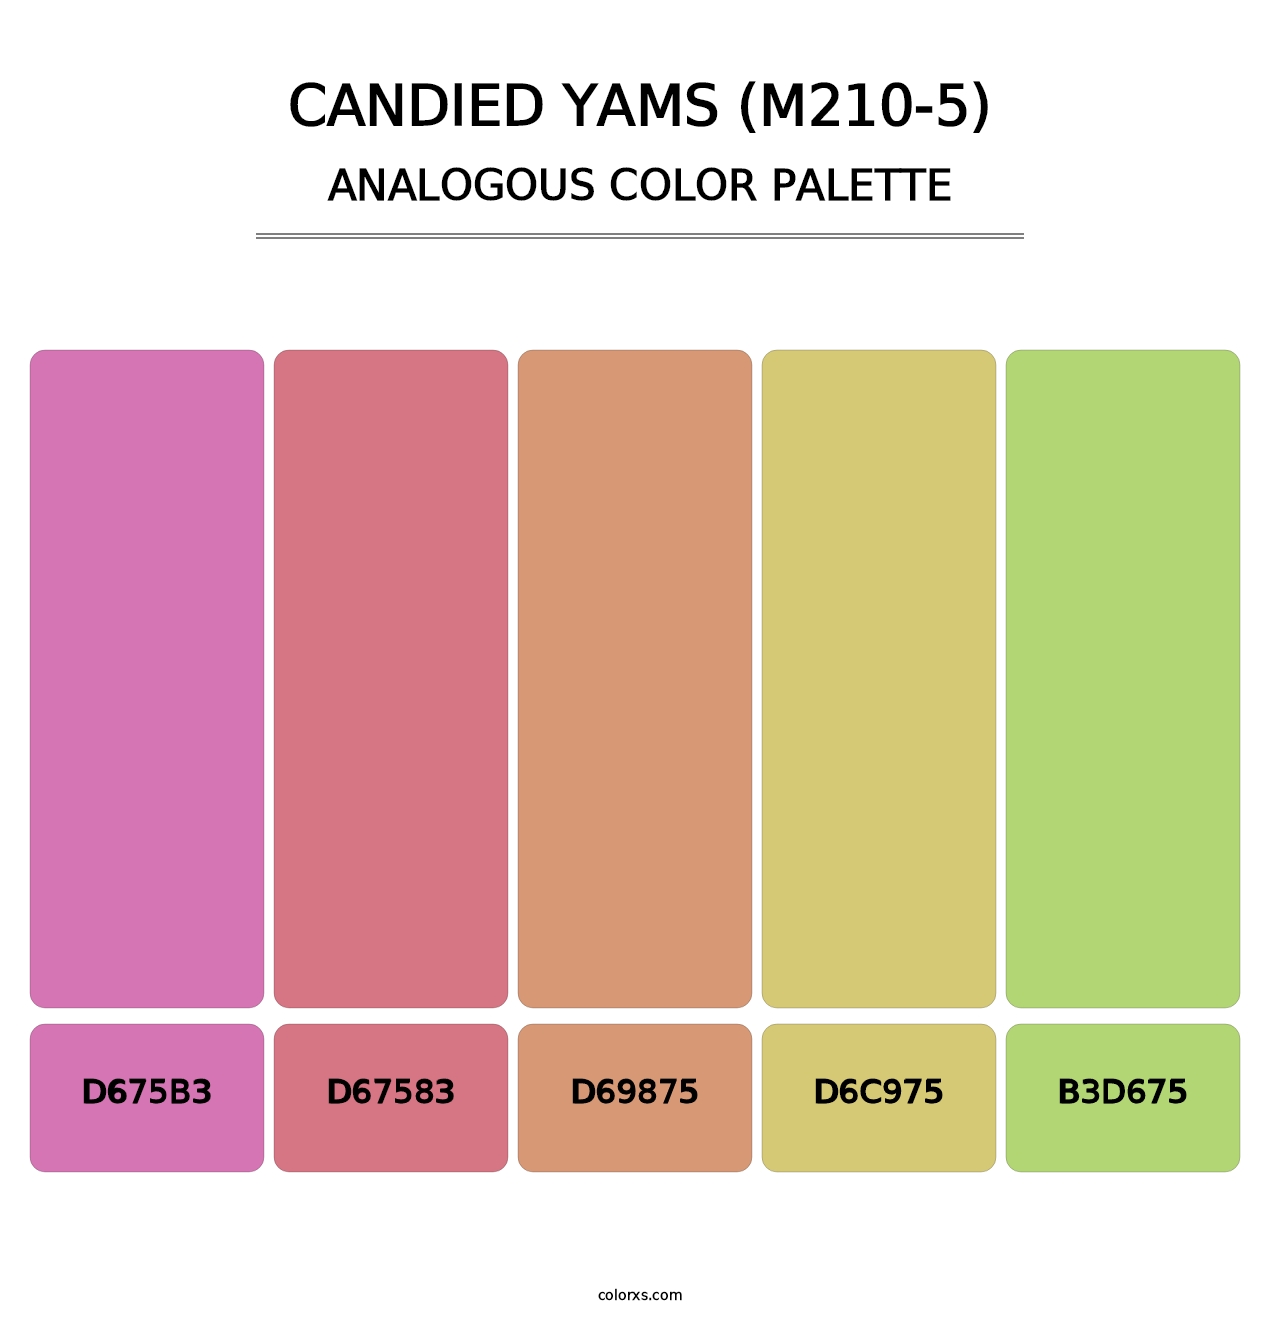 Candied Yams (M210-5) - Analogous Color Palette